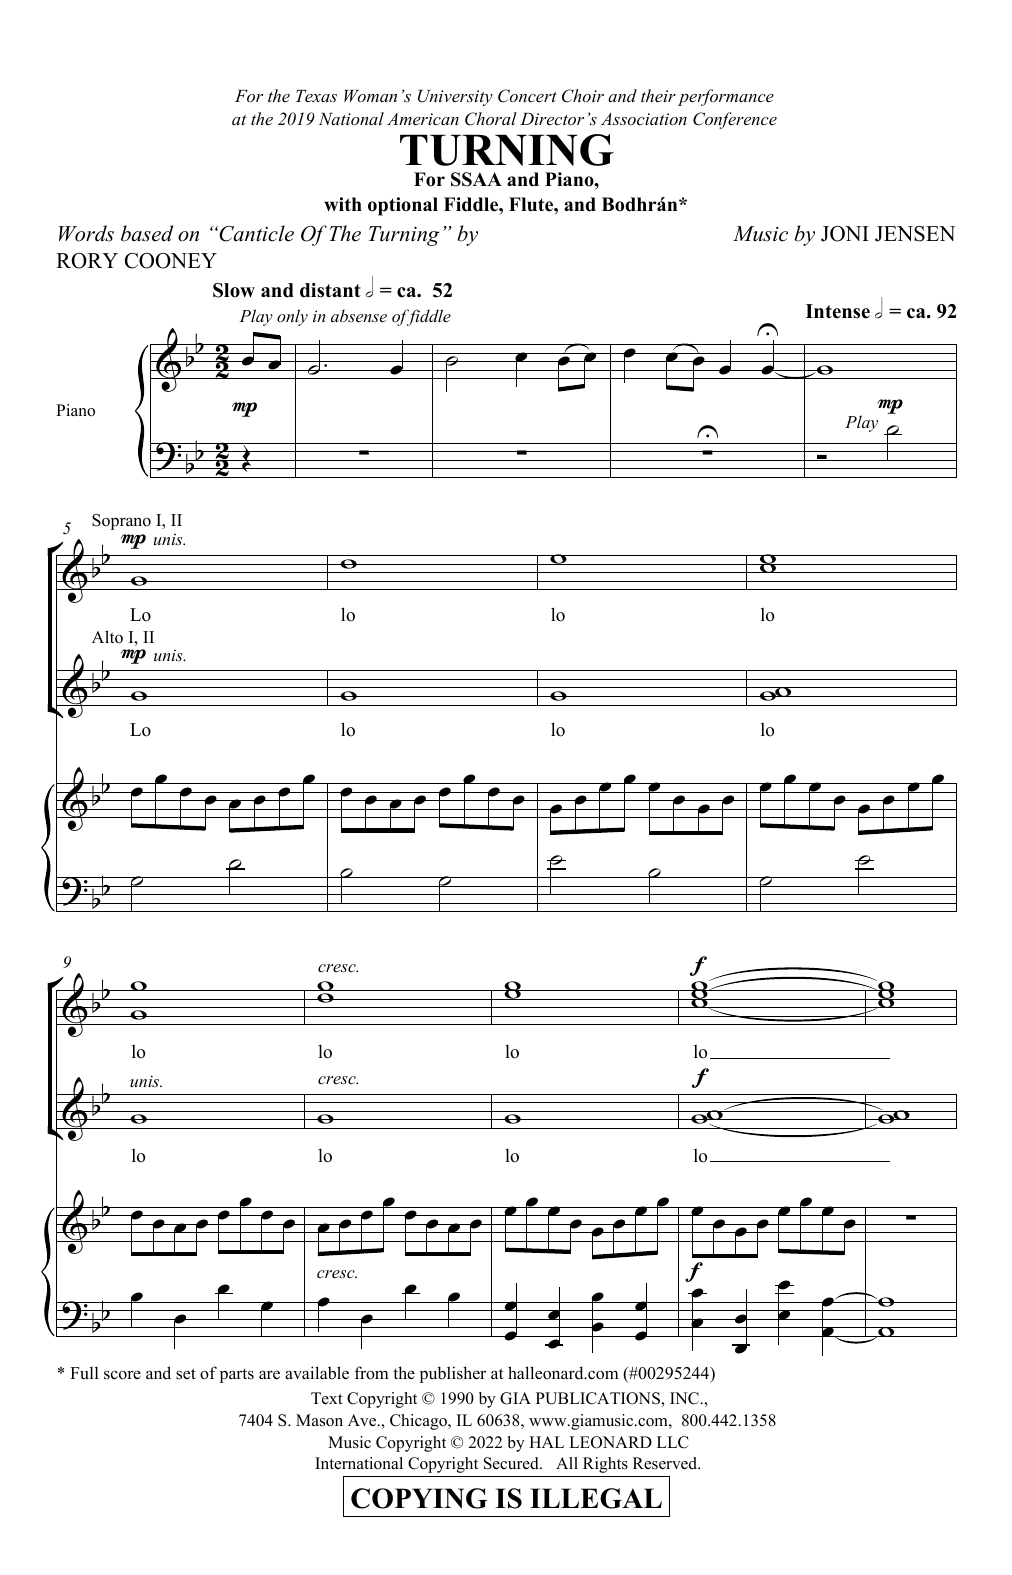 Irish Folk Song Turning (arr. Joni Jenson) Sheet Music Notes & Chords for SSA Choir - Download or Print PDF